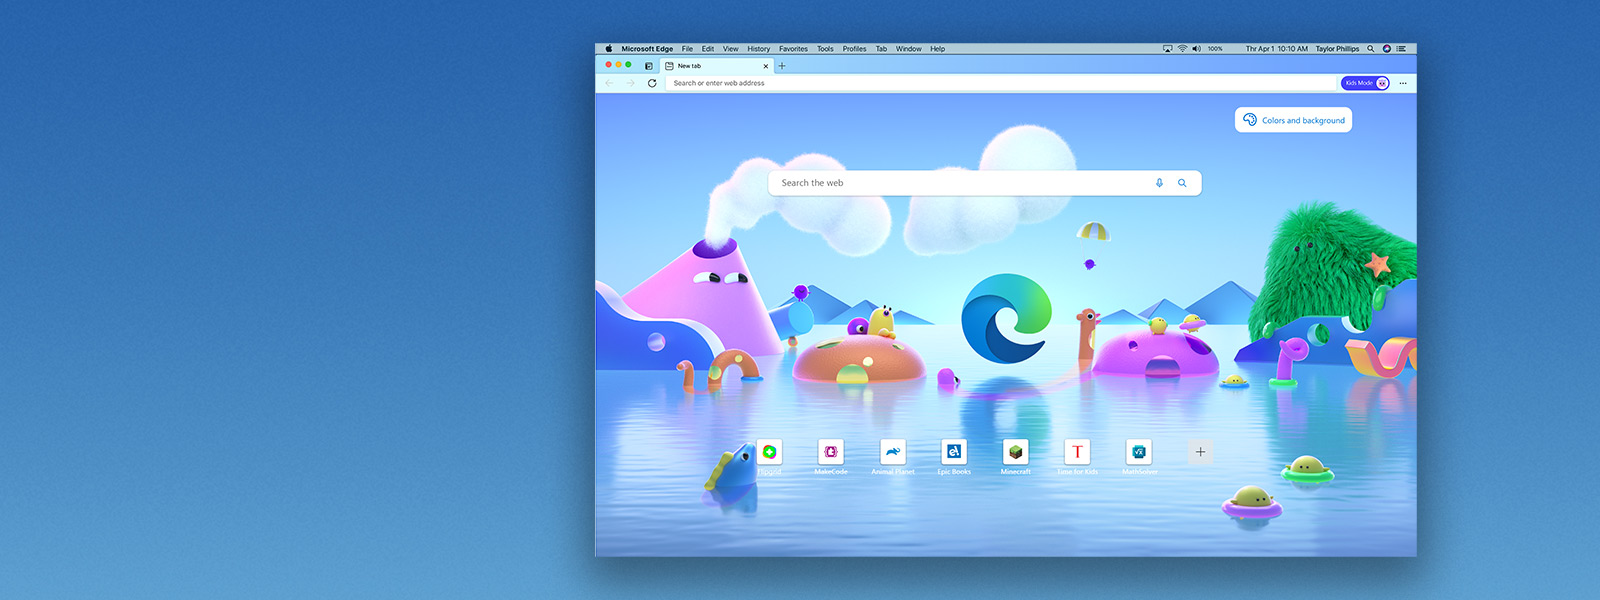 Microsoft Edge 浏览器主屏幕显示儿童模式的各种卡通形象